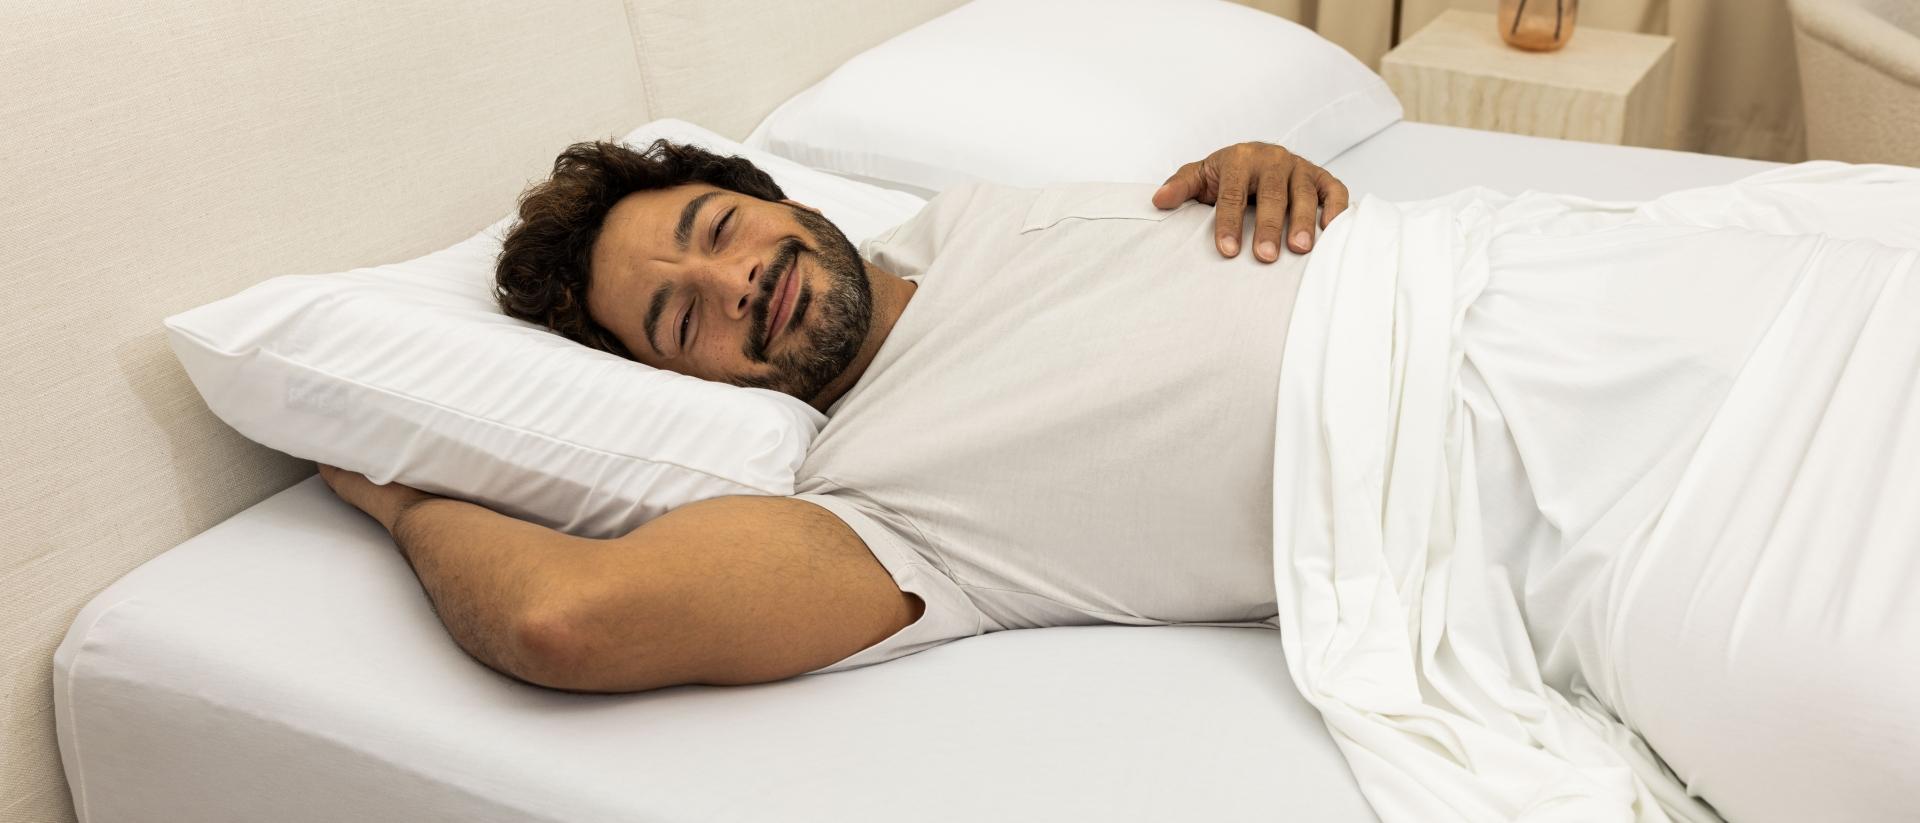 Man sleeping on mattress well rested